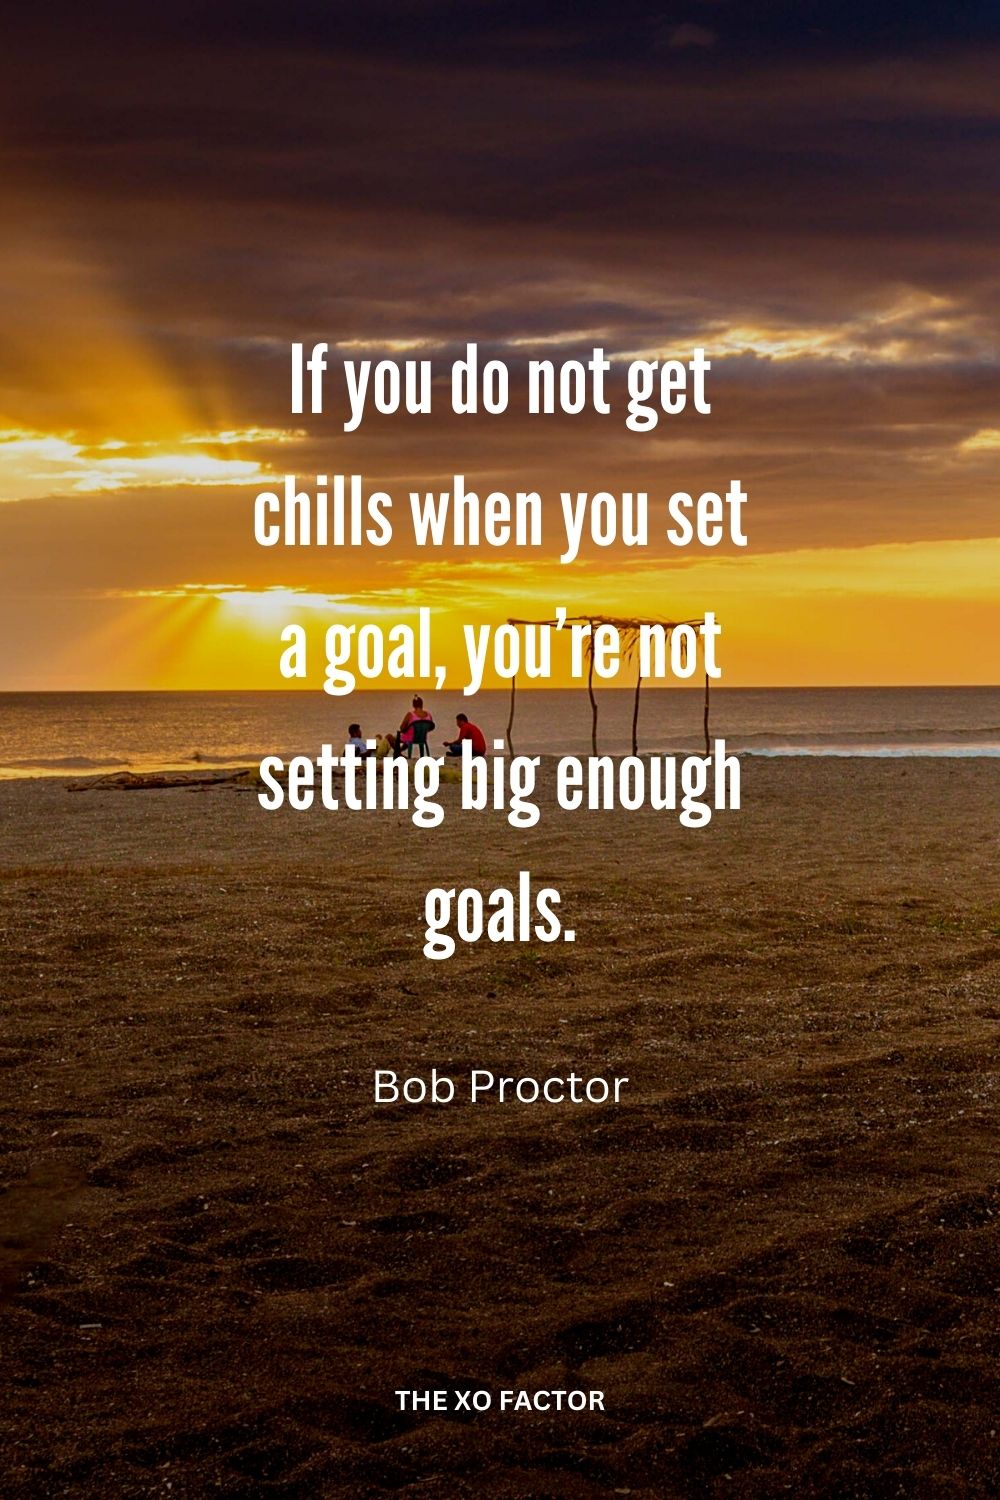 If you do not get chills when you set a goal, you’re not setting big enough goals.
Bob Proctor